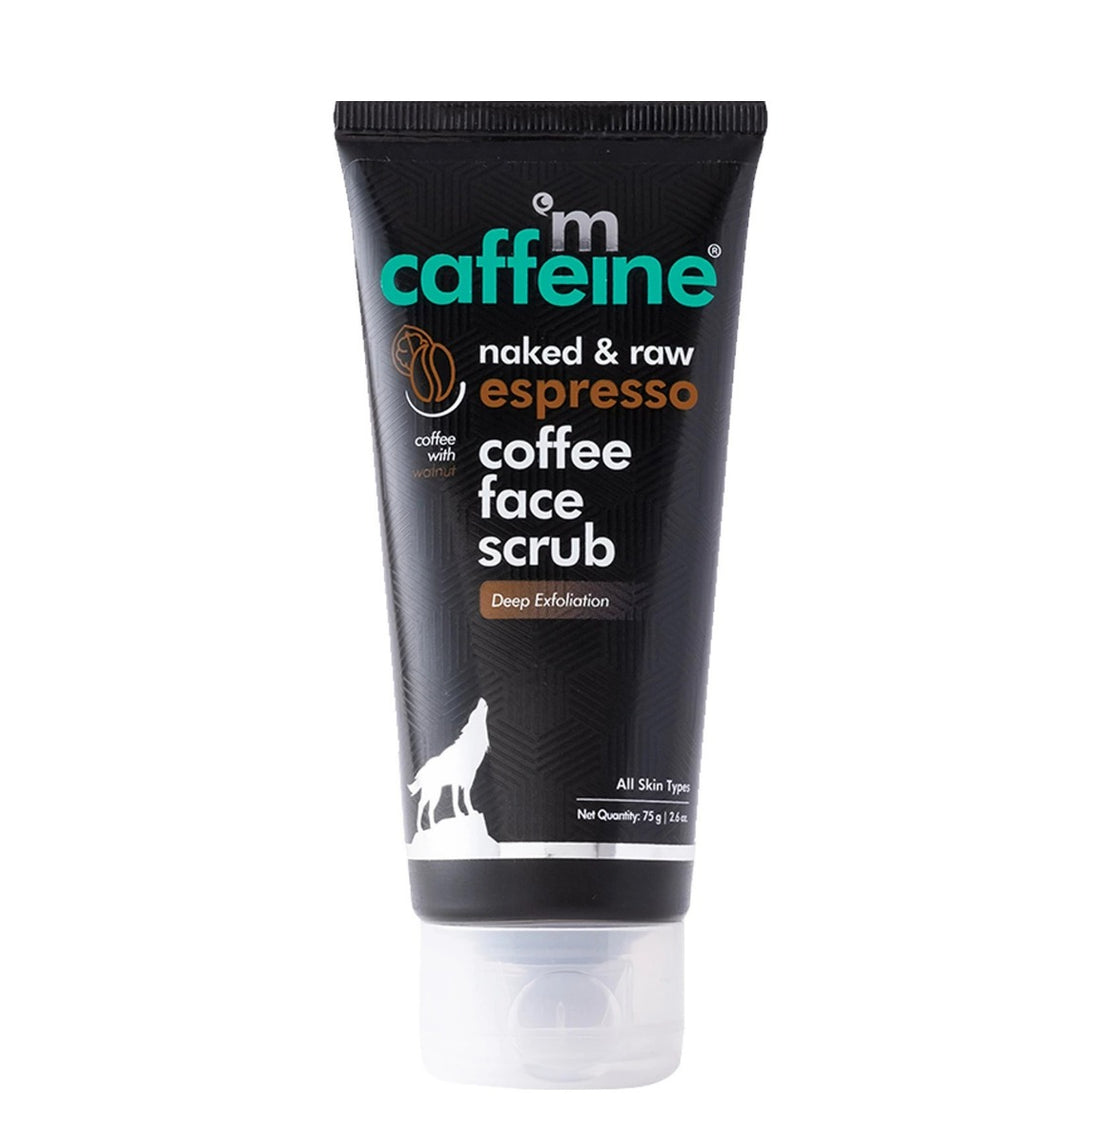 mCaffeine Naked and Raw Espresso Coffee Face Scrub (75gm)